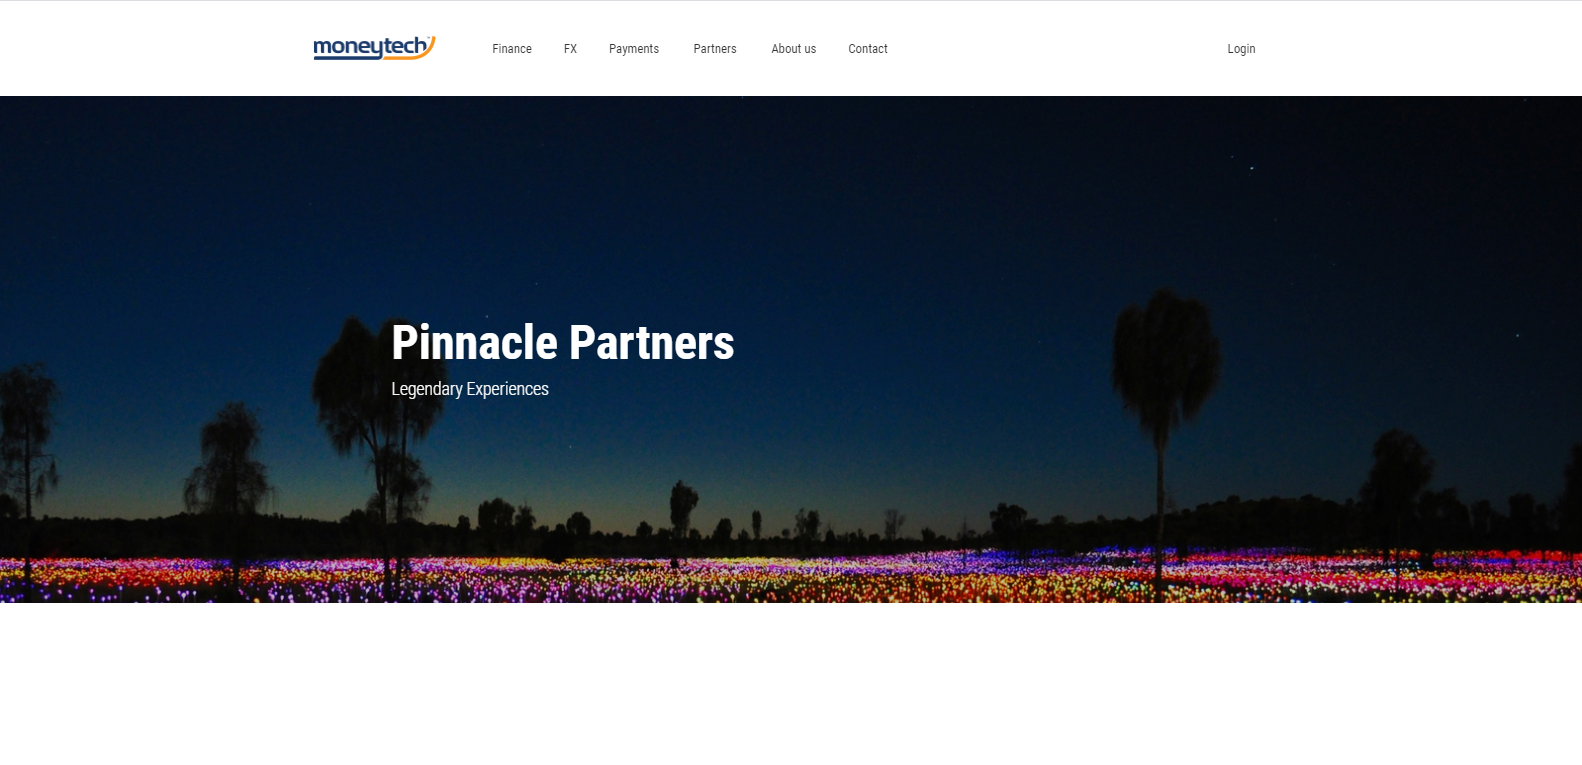 Pinnacle partners page